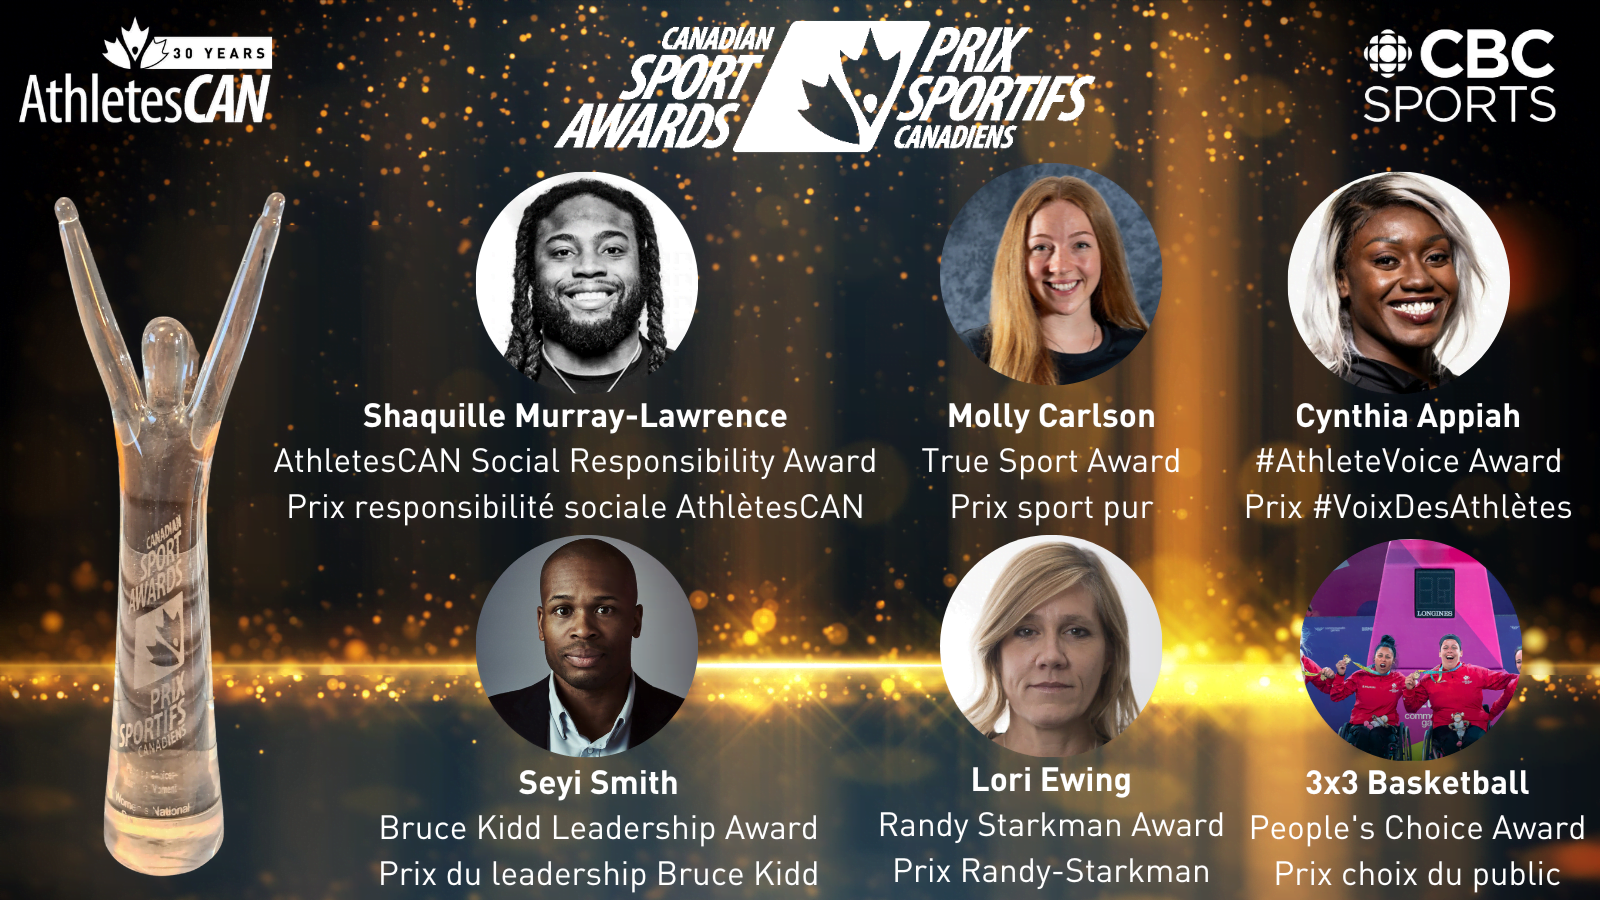 Ewing headlines 45th Canadian Sport Award recipients with revived Randy Starkman Award